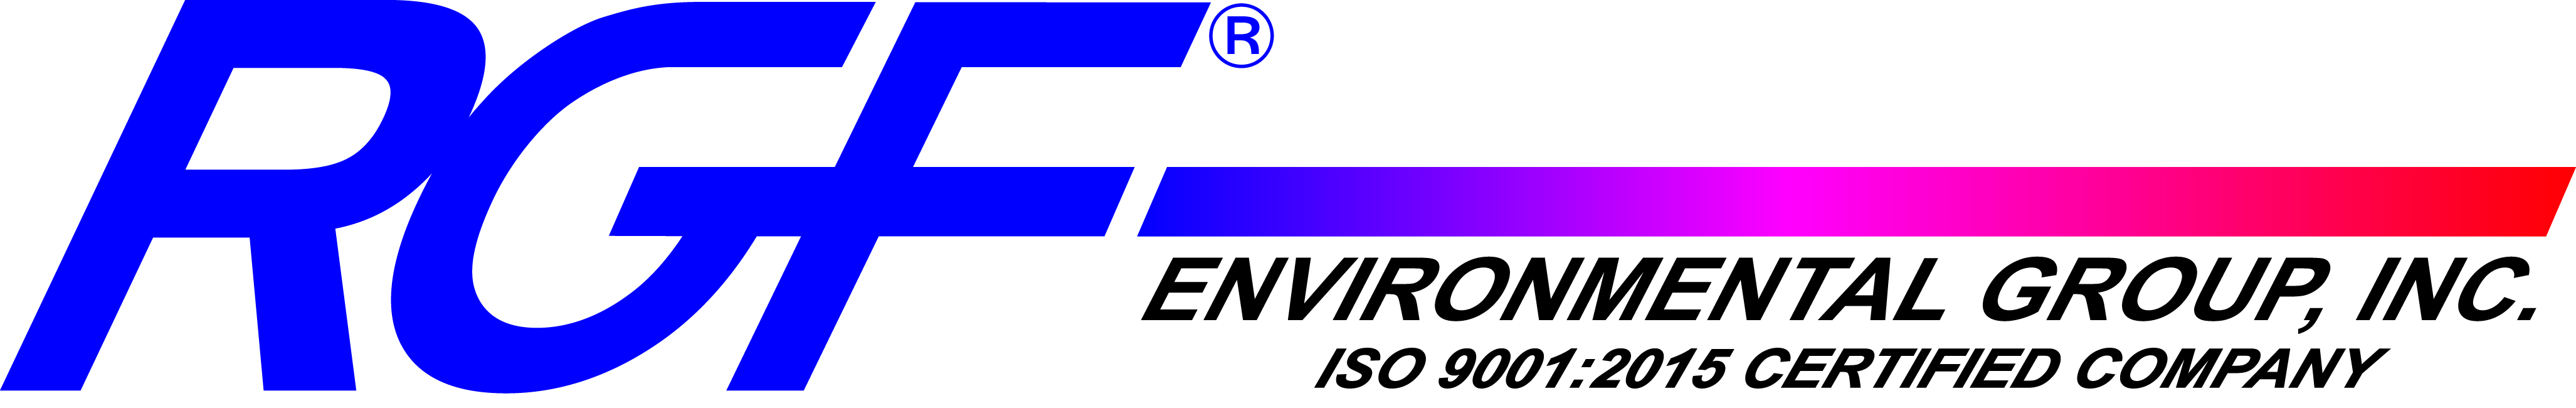 RGF Environmental Group Logo